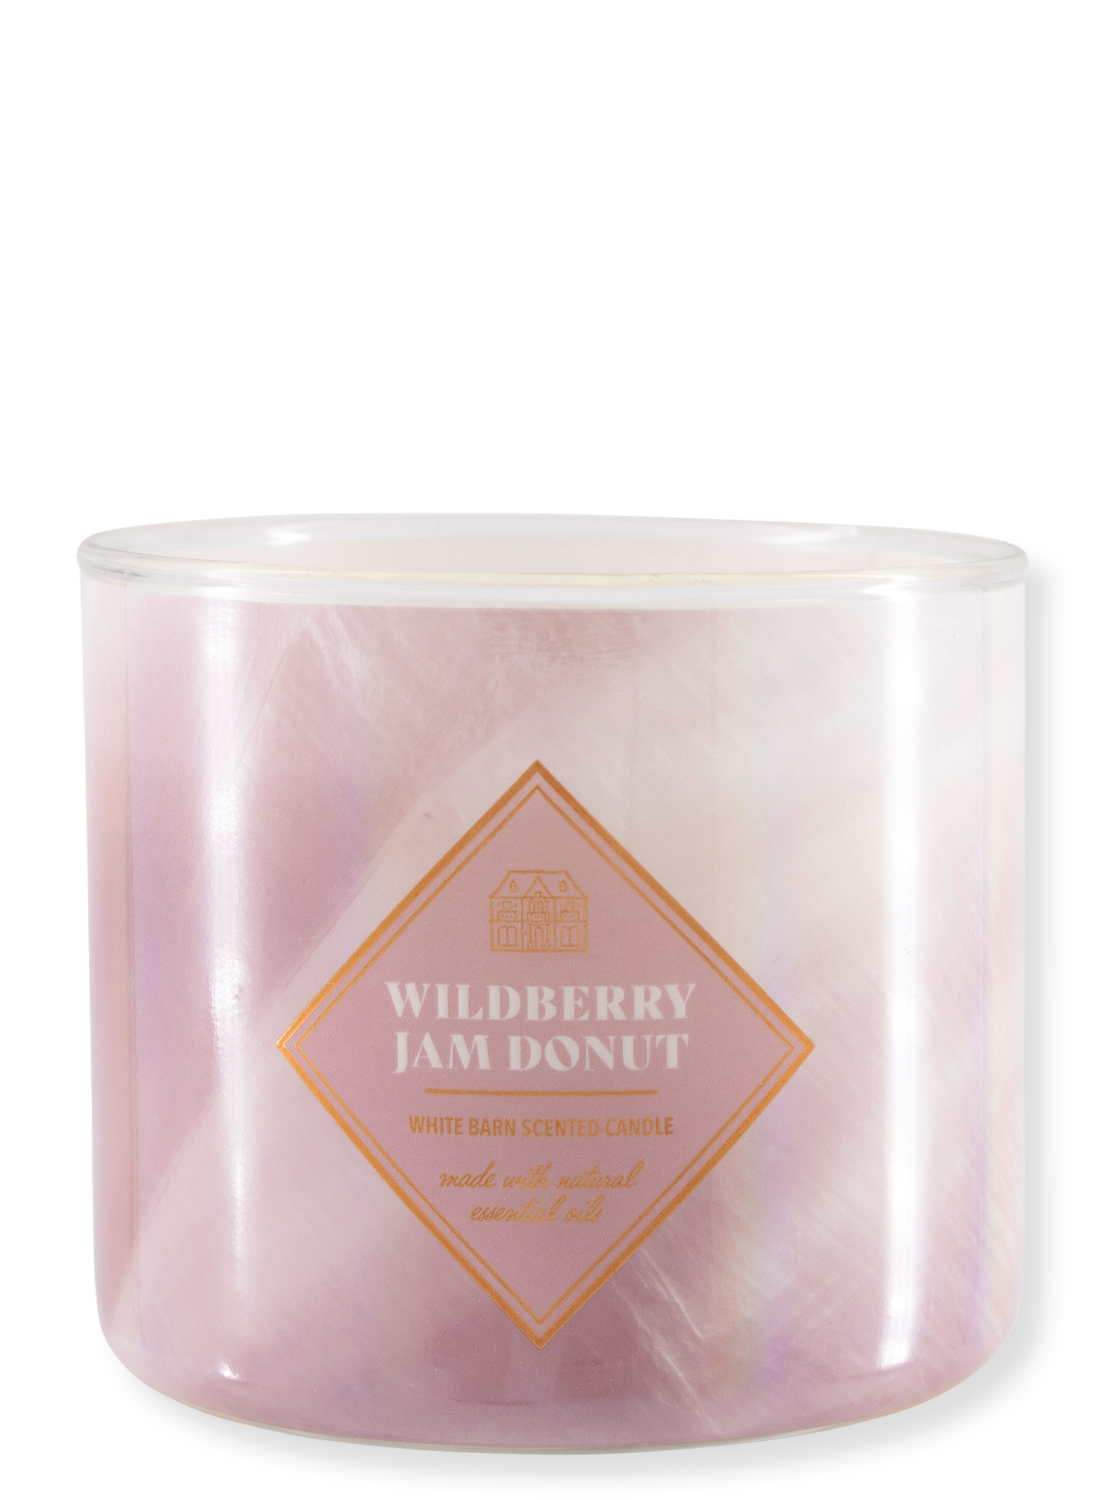 3 -docht candle - Wildberry Jam Donut - 411g